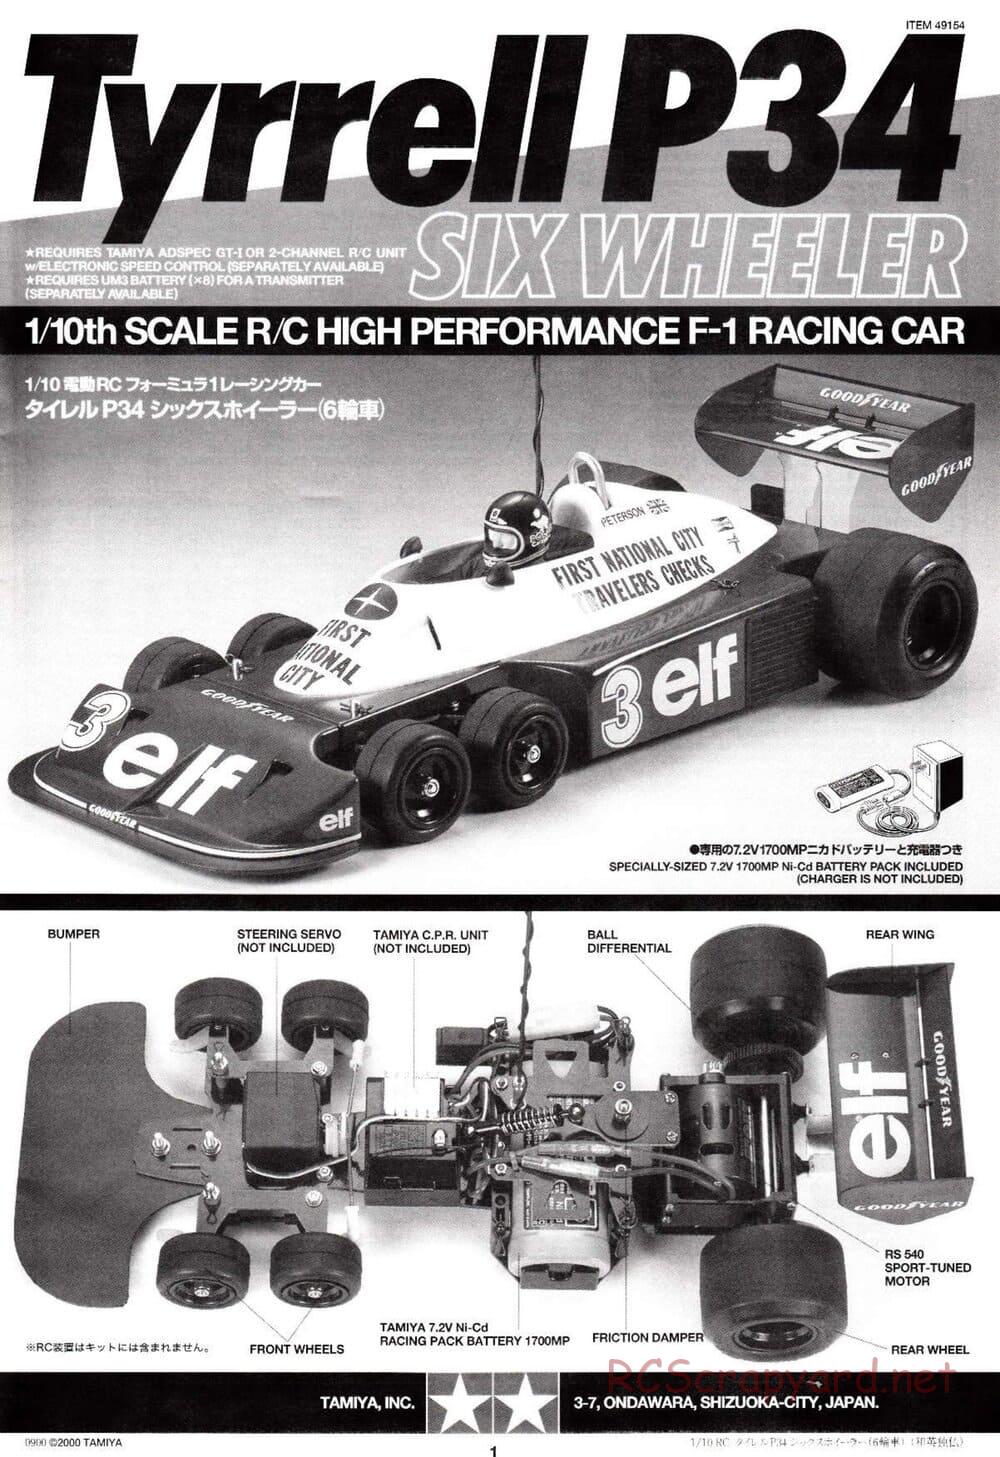 Tamiya - Tyrrell P34 Six Wheeler - F103-6W Chassis - Manual - Page 1